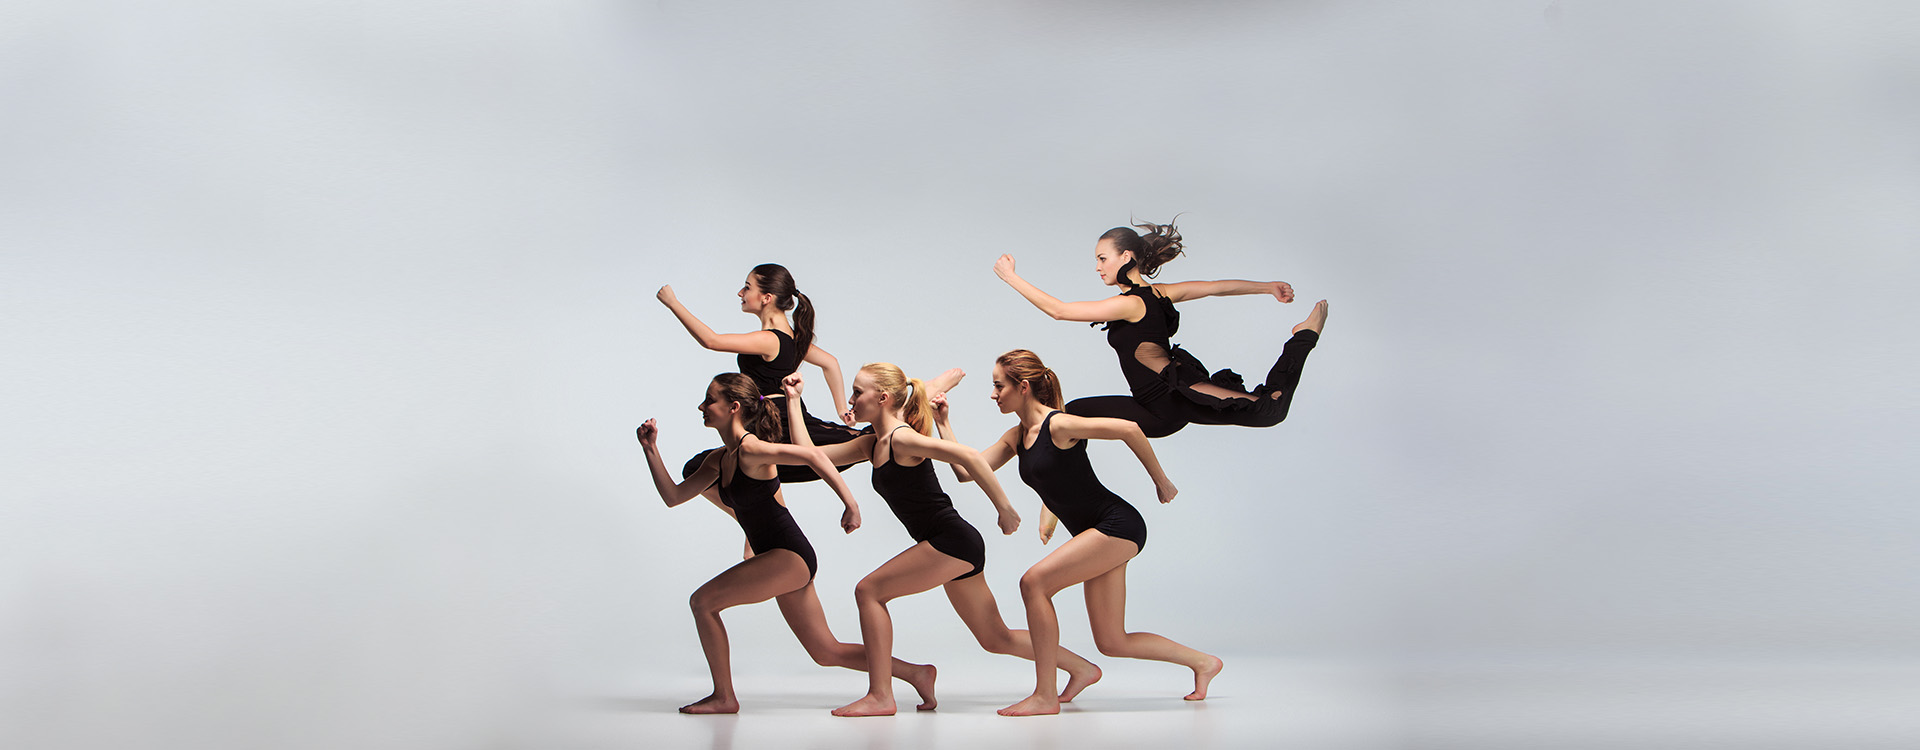 The group of modern ballet dancers